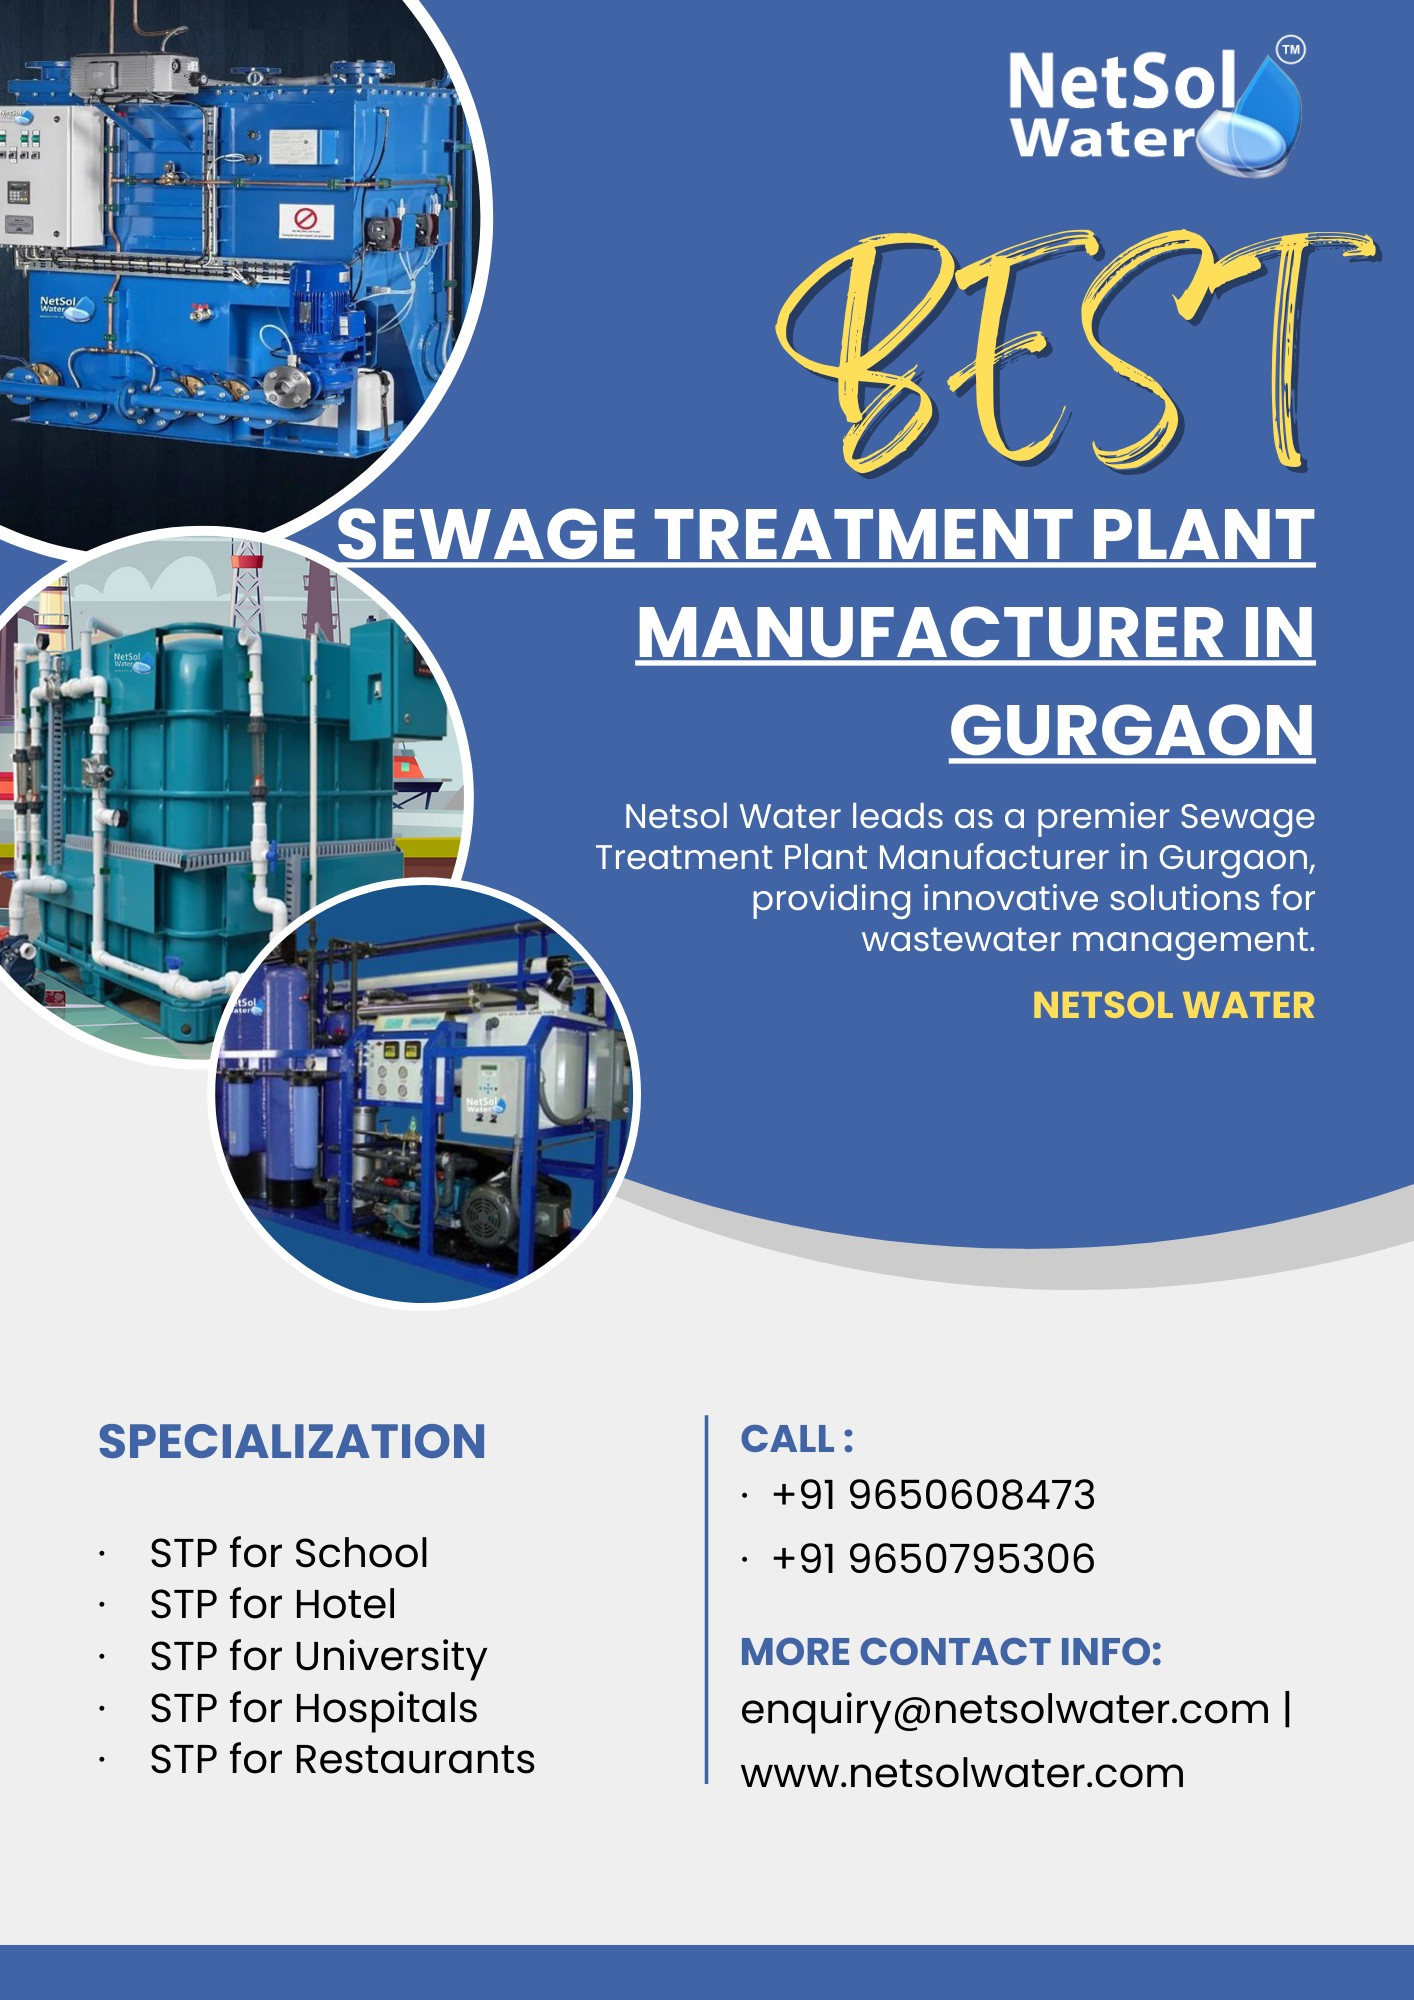 Sewage Ttreatment Plant Manufacturer in Gurgaon